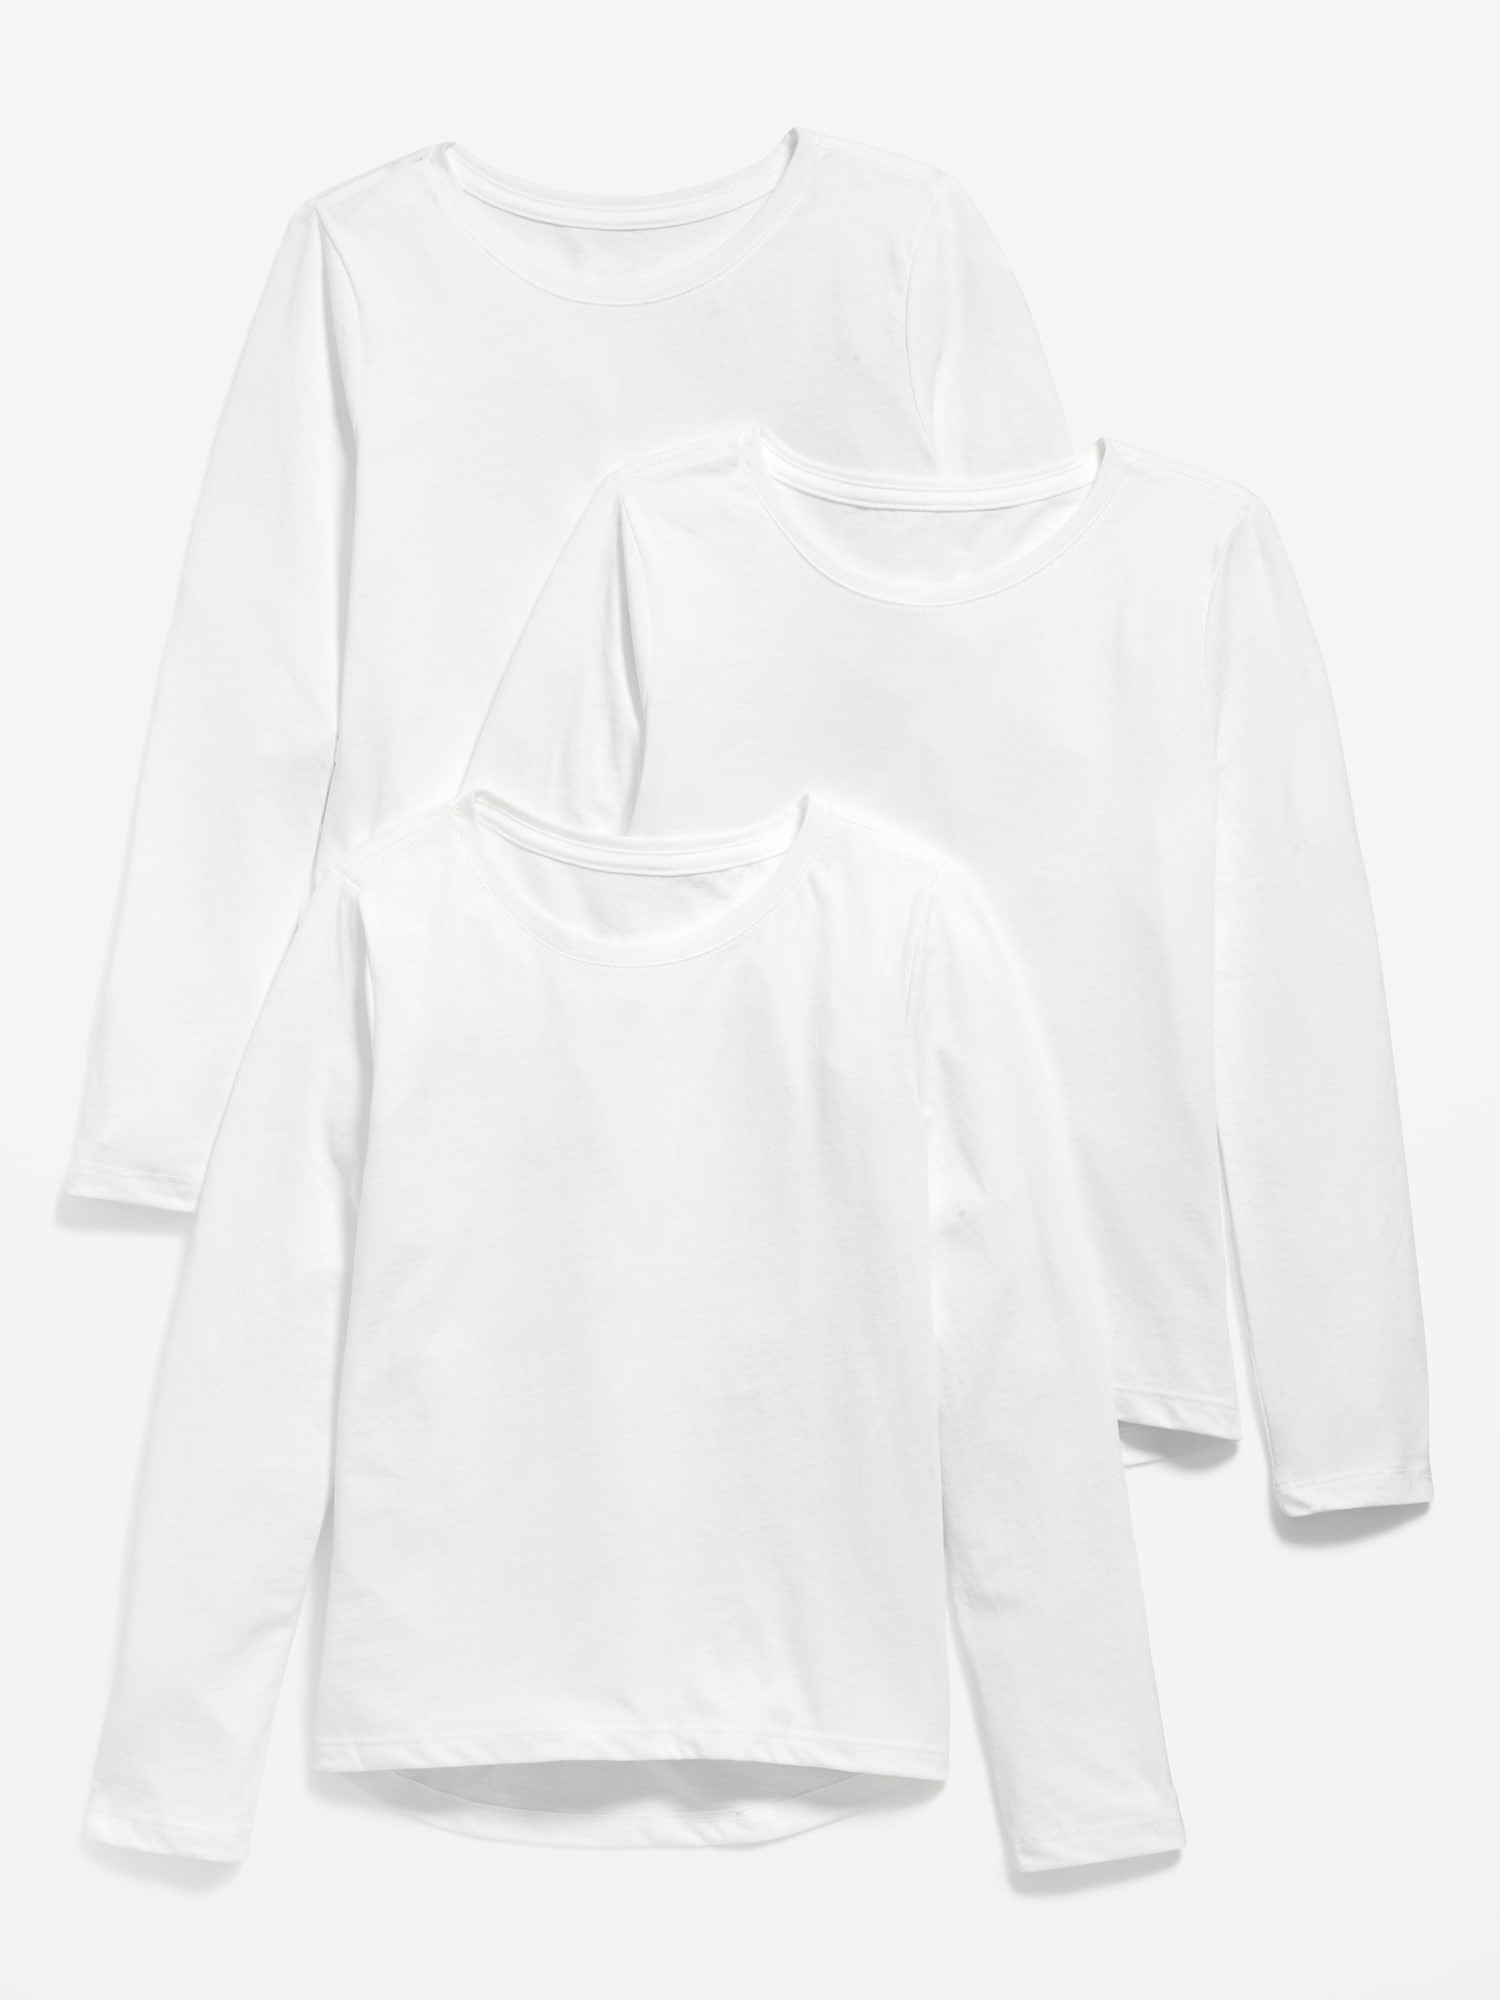 Girls Long Sleeve Shirts | Navy Old